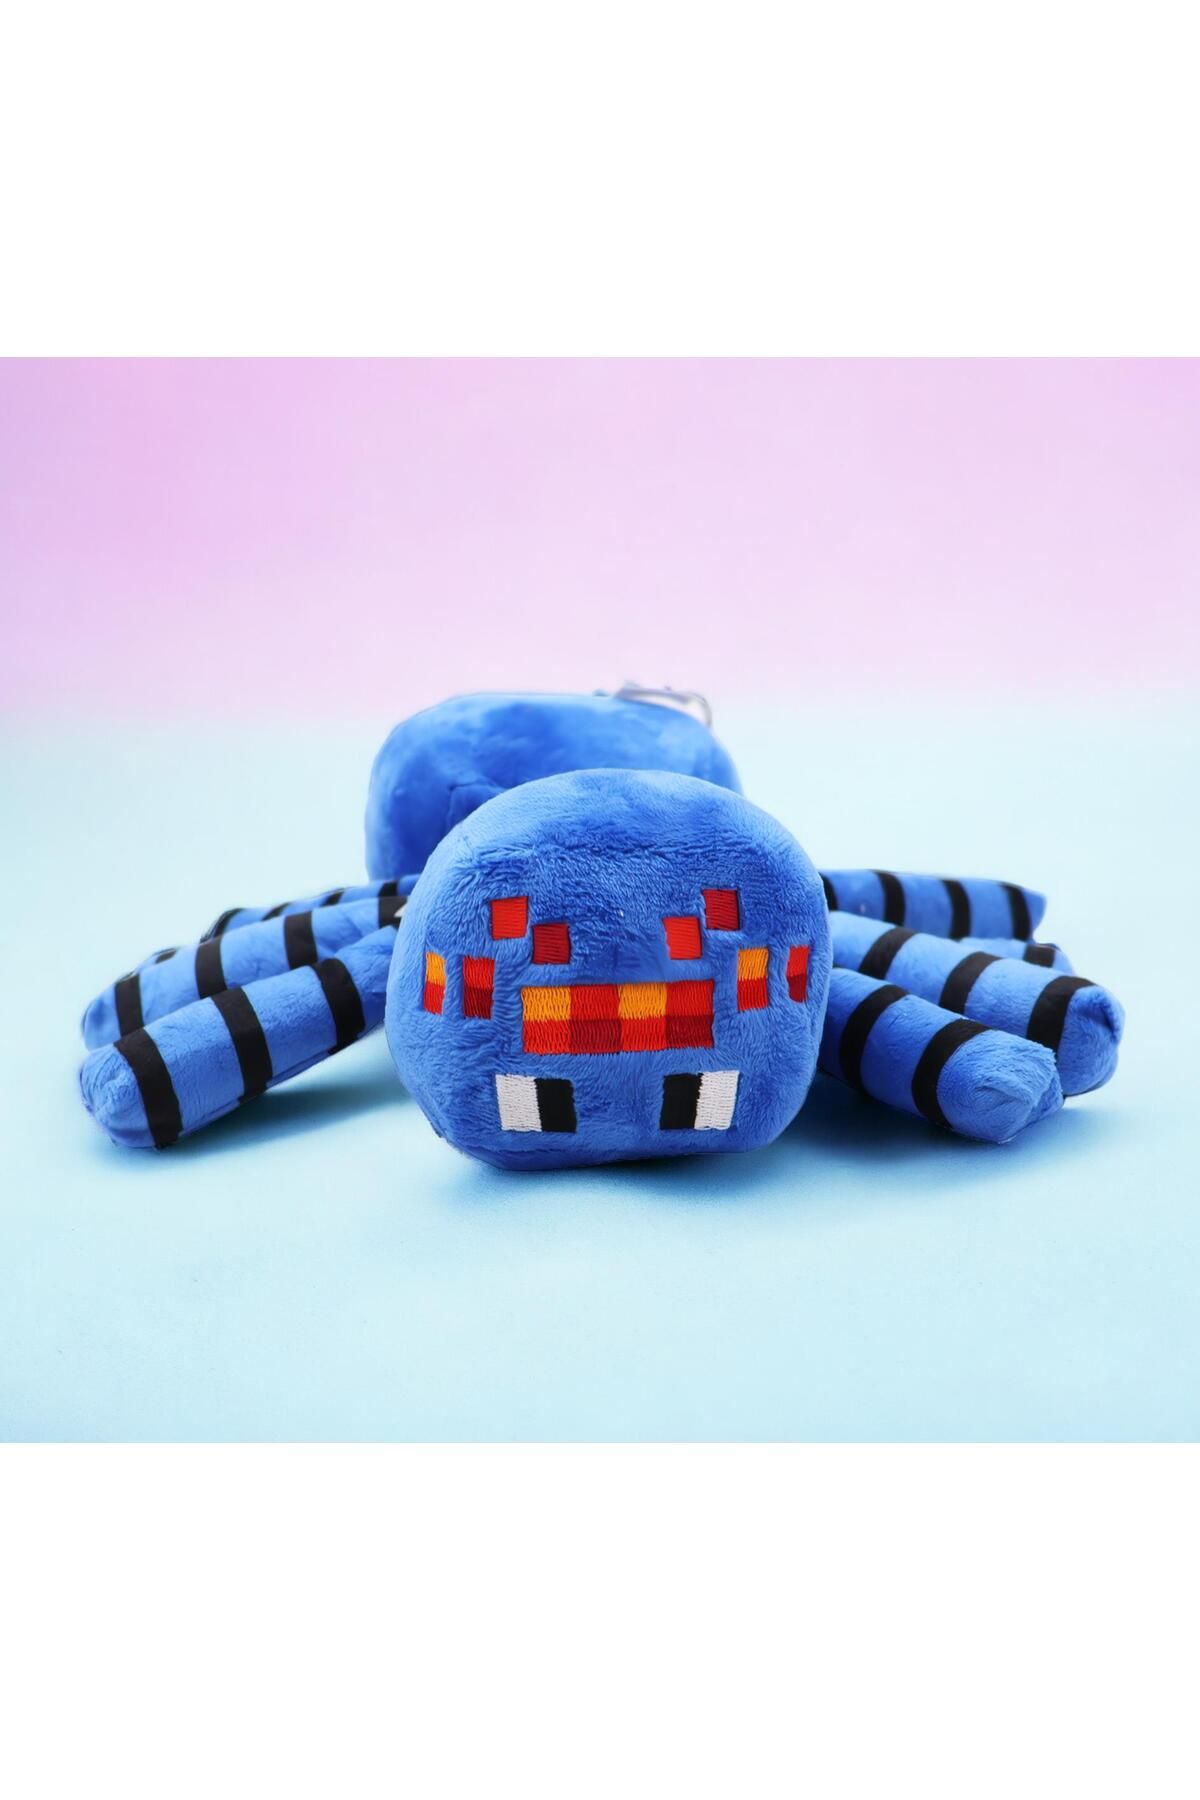 e-life shop Minecraft Jinx Mojang Blue Spider Karakter Figür Peluş Oyuncak Uyku Oyun Arkadaşı 30 cm.